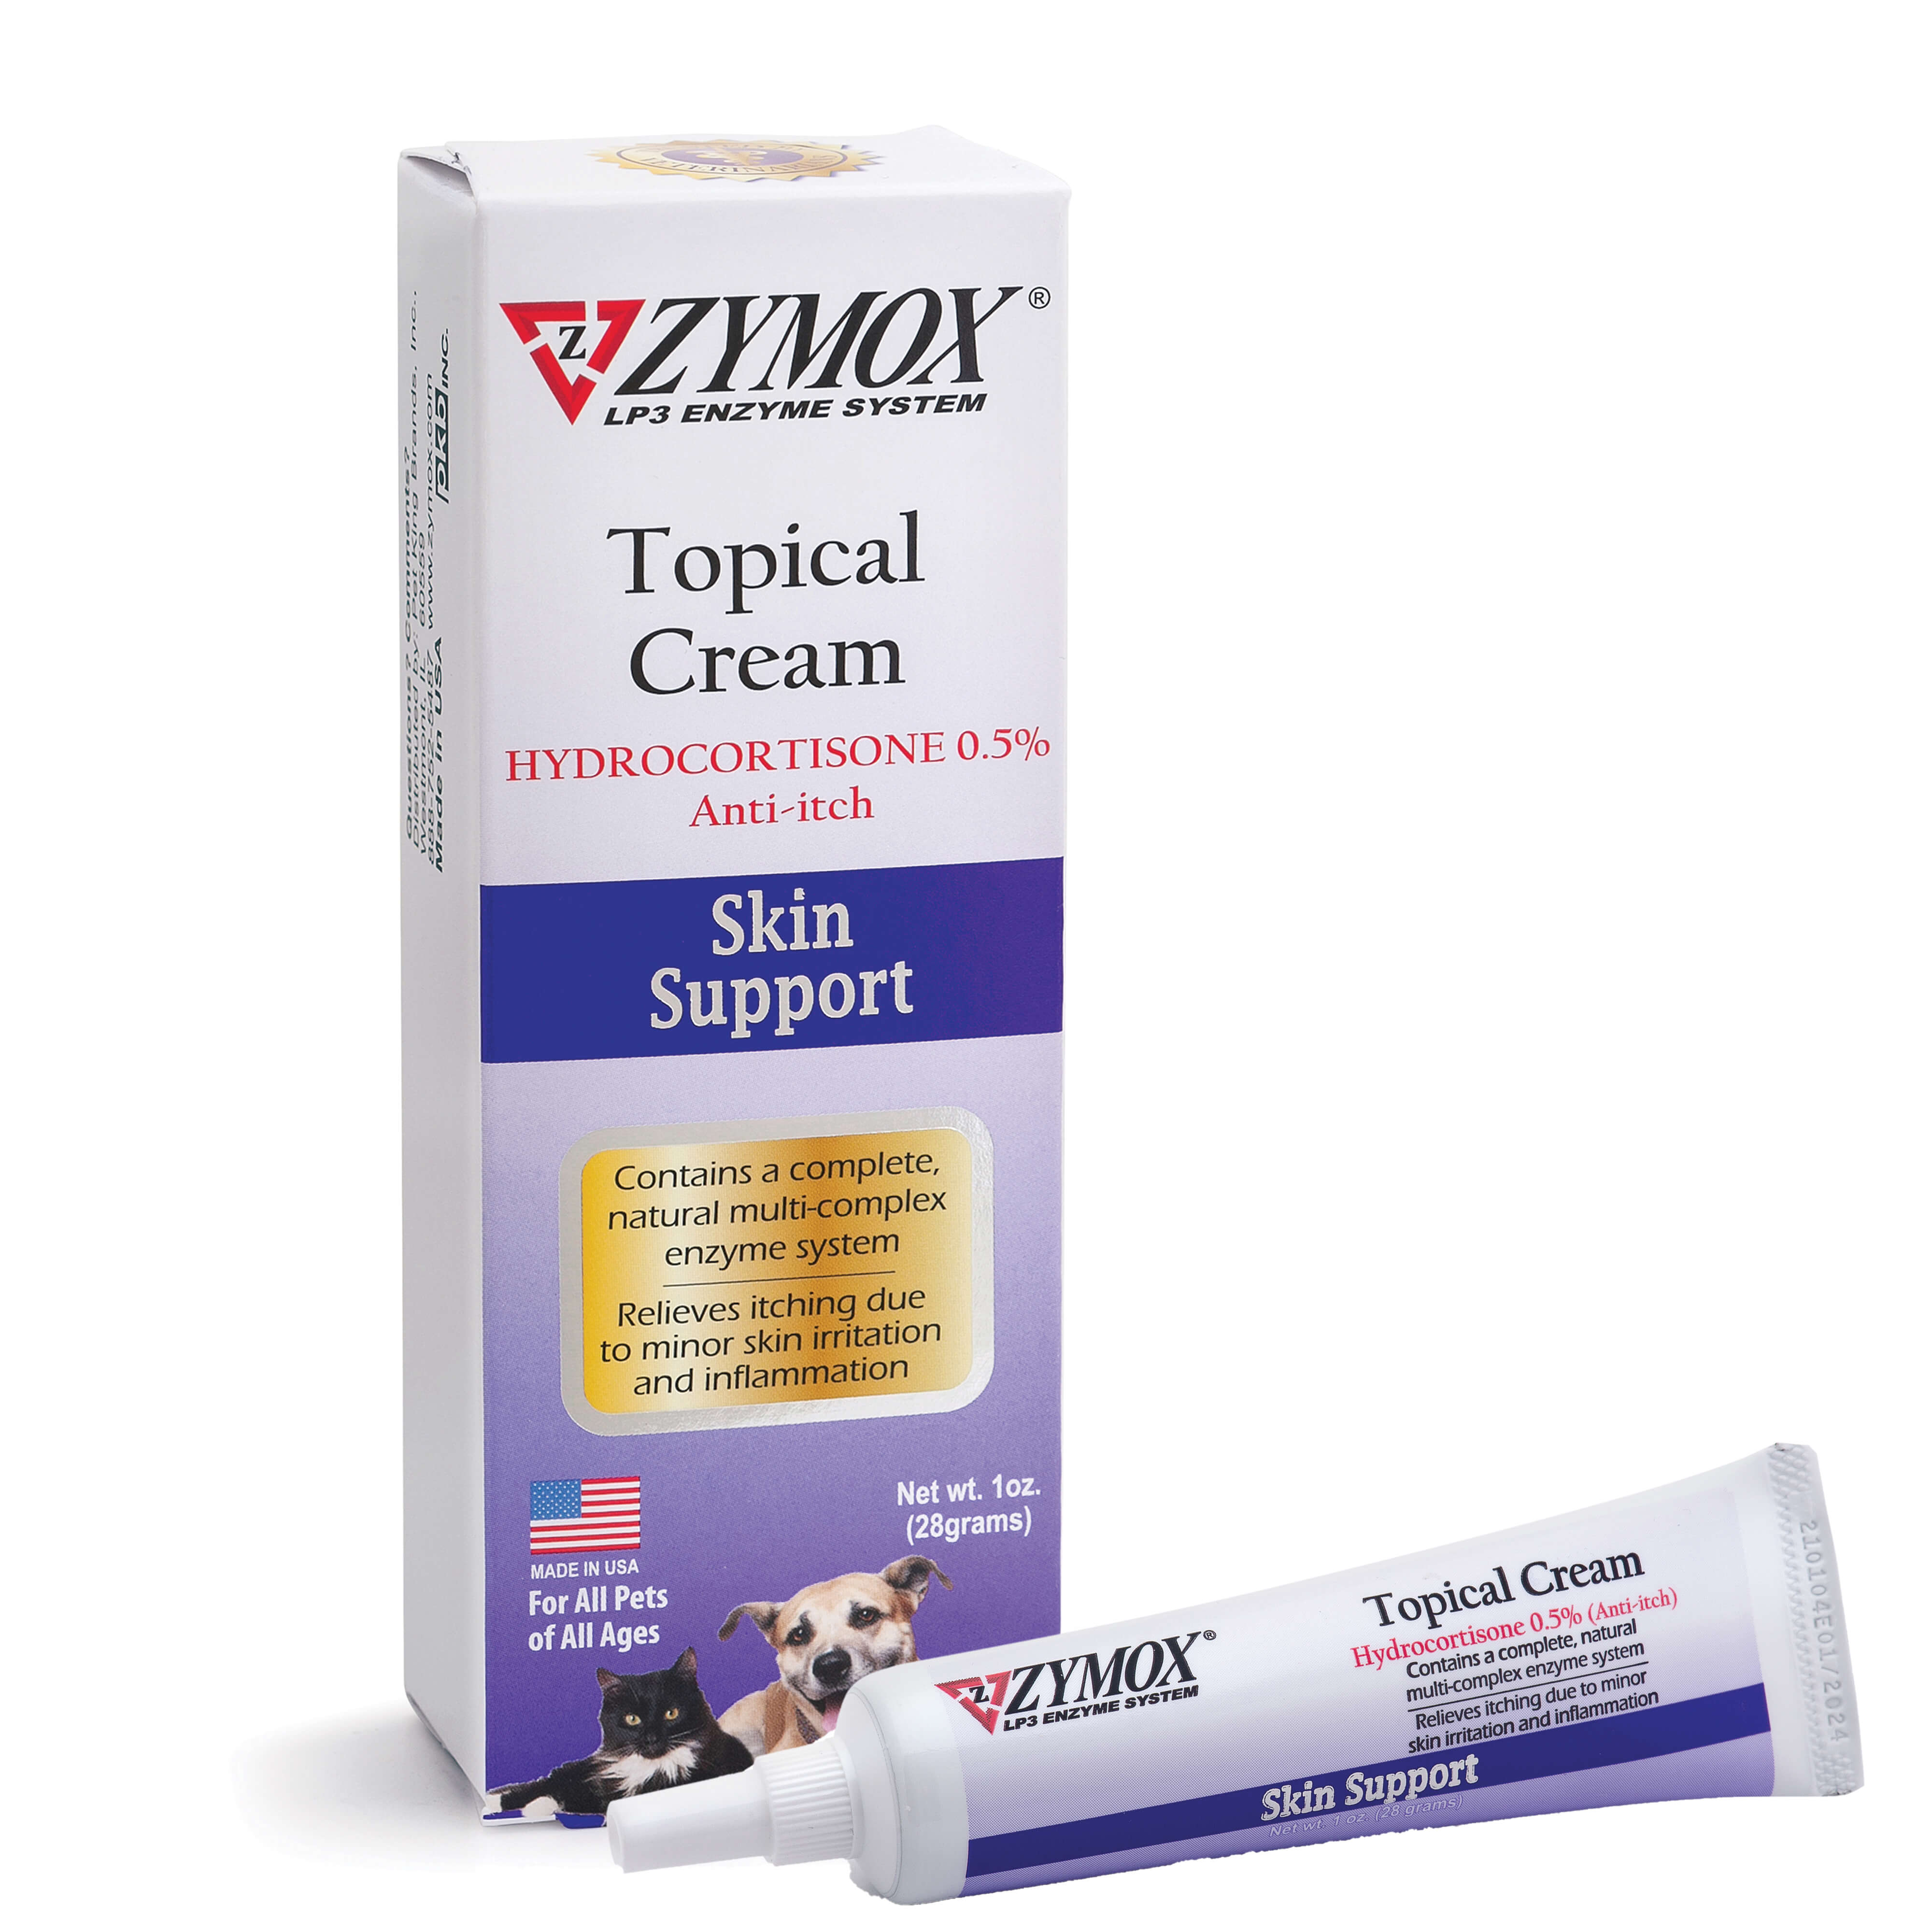 Zymox tropical cream